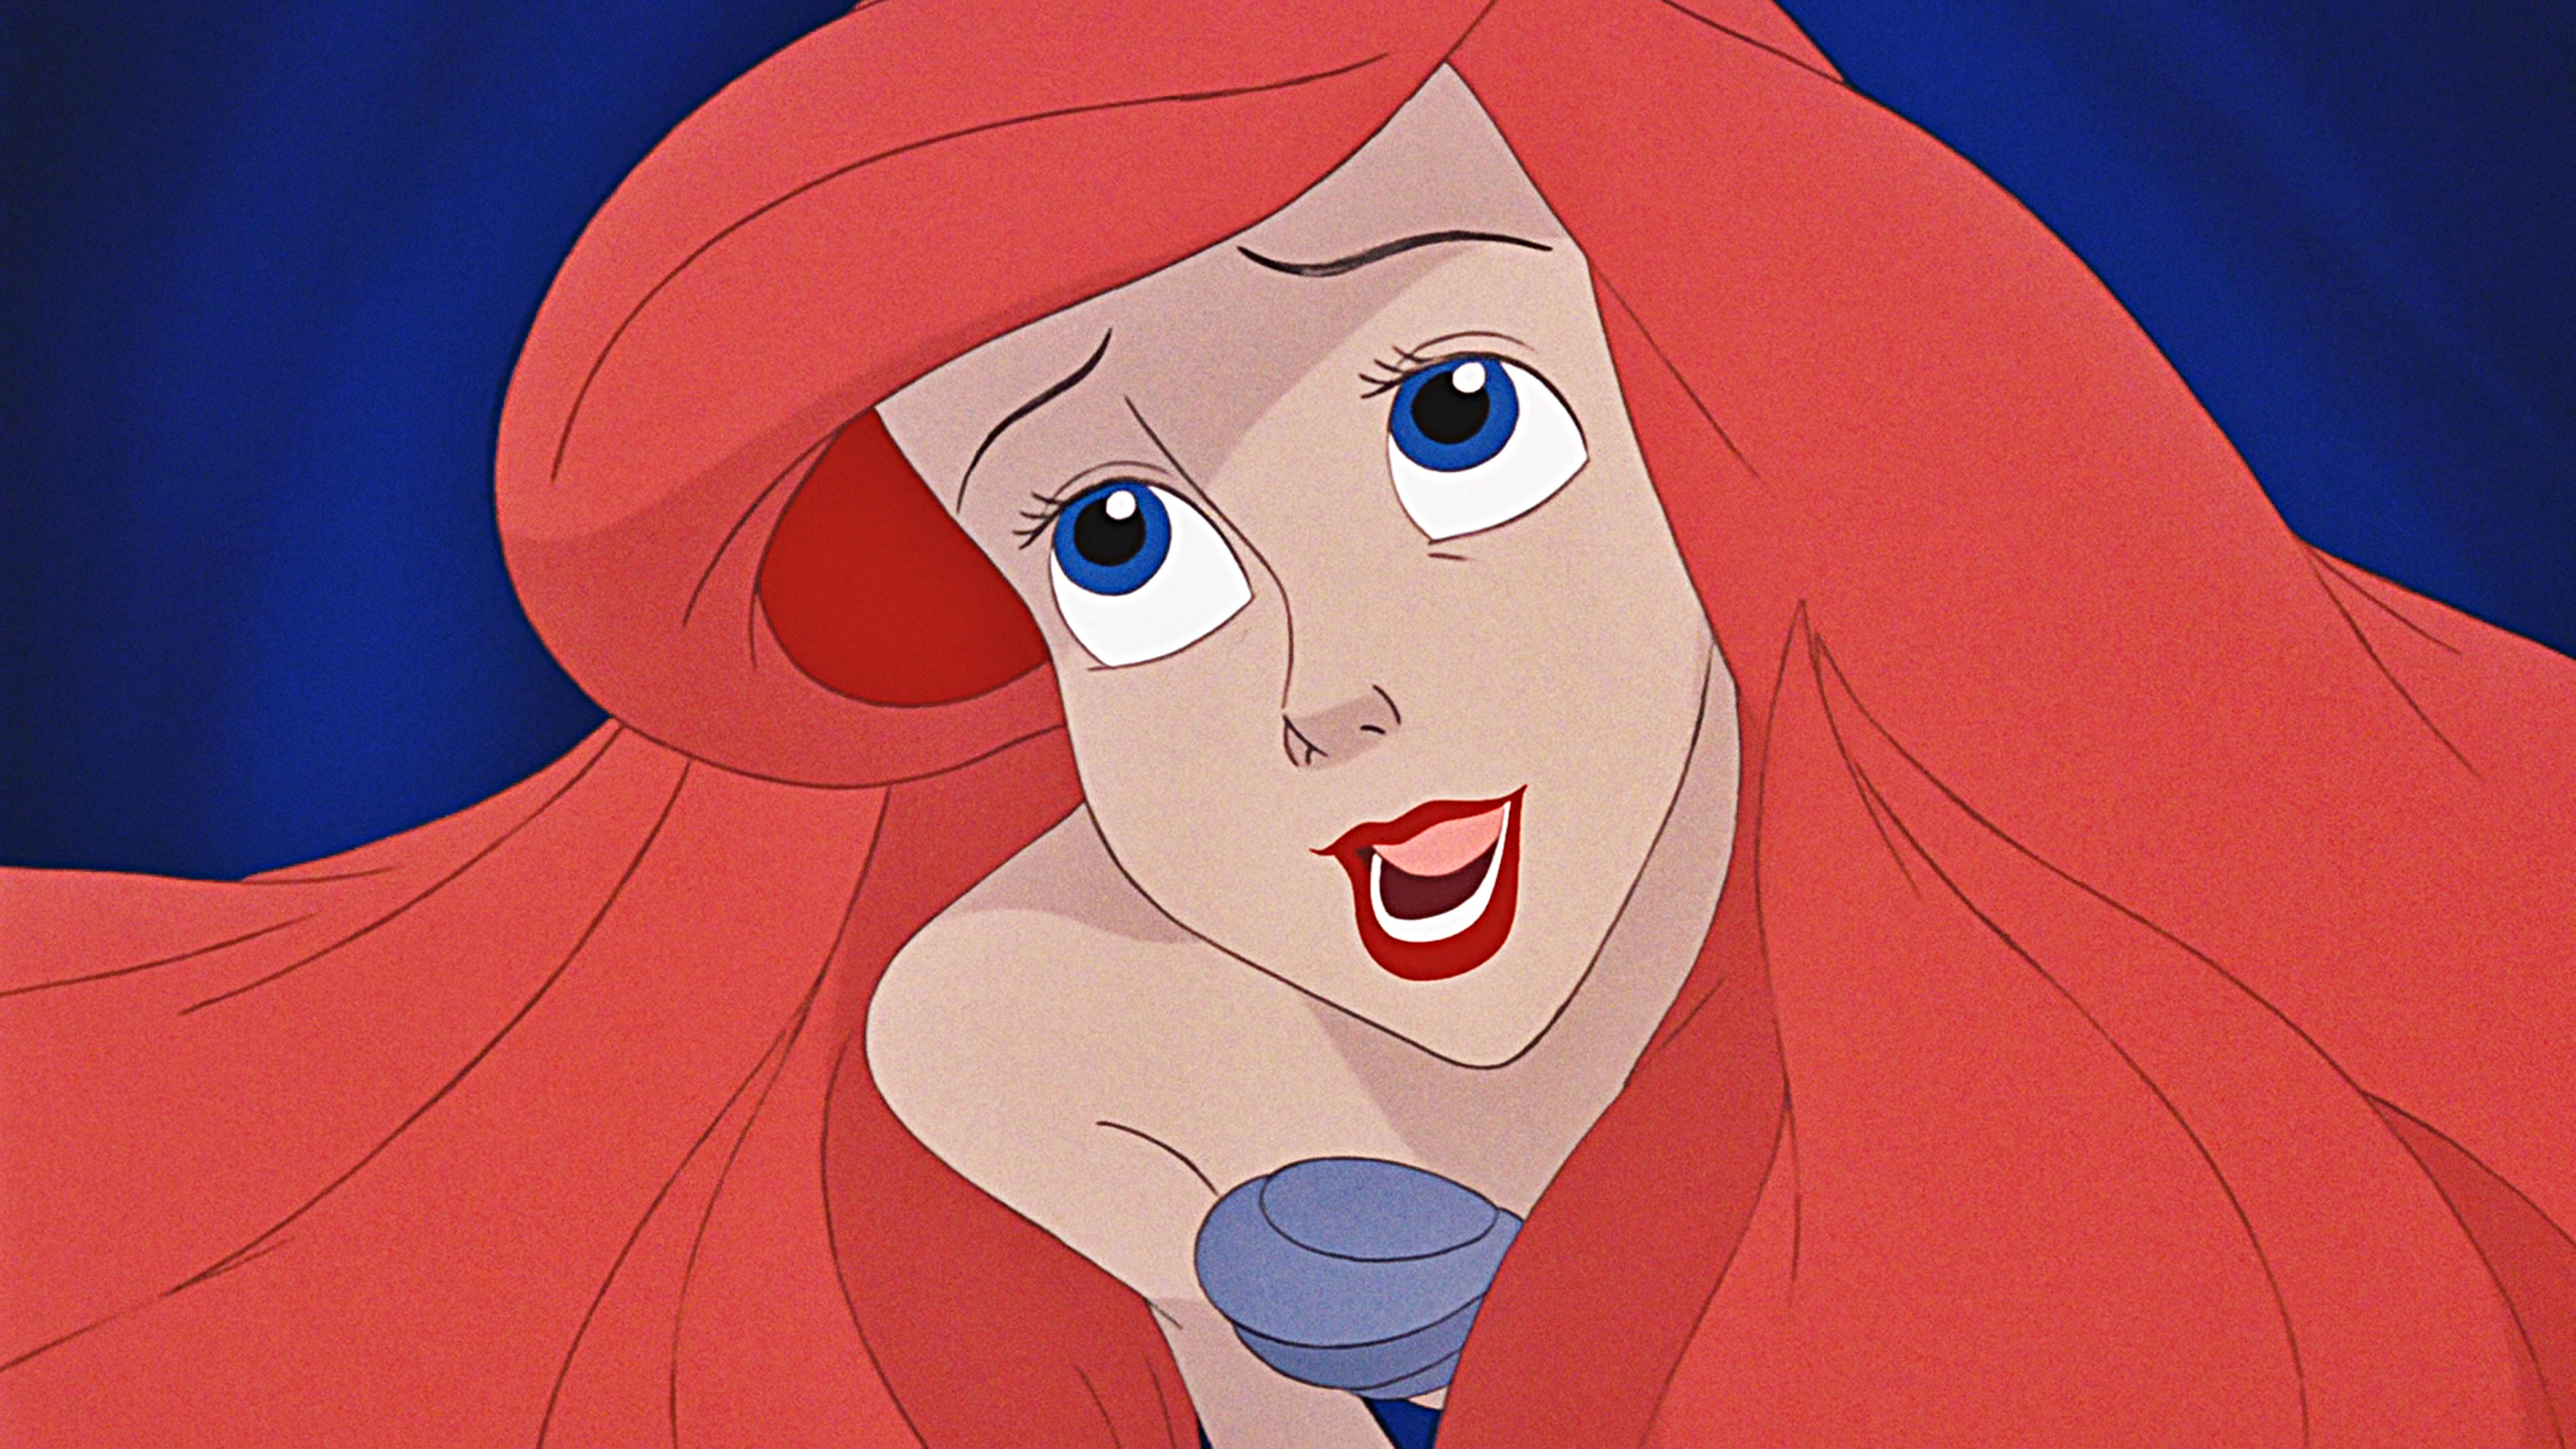 Disney Princess Ariel The Little Mermaid